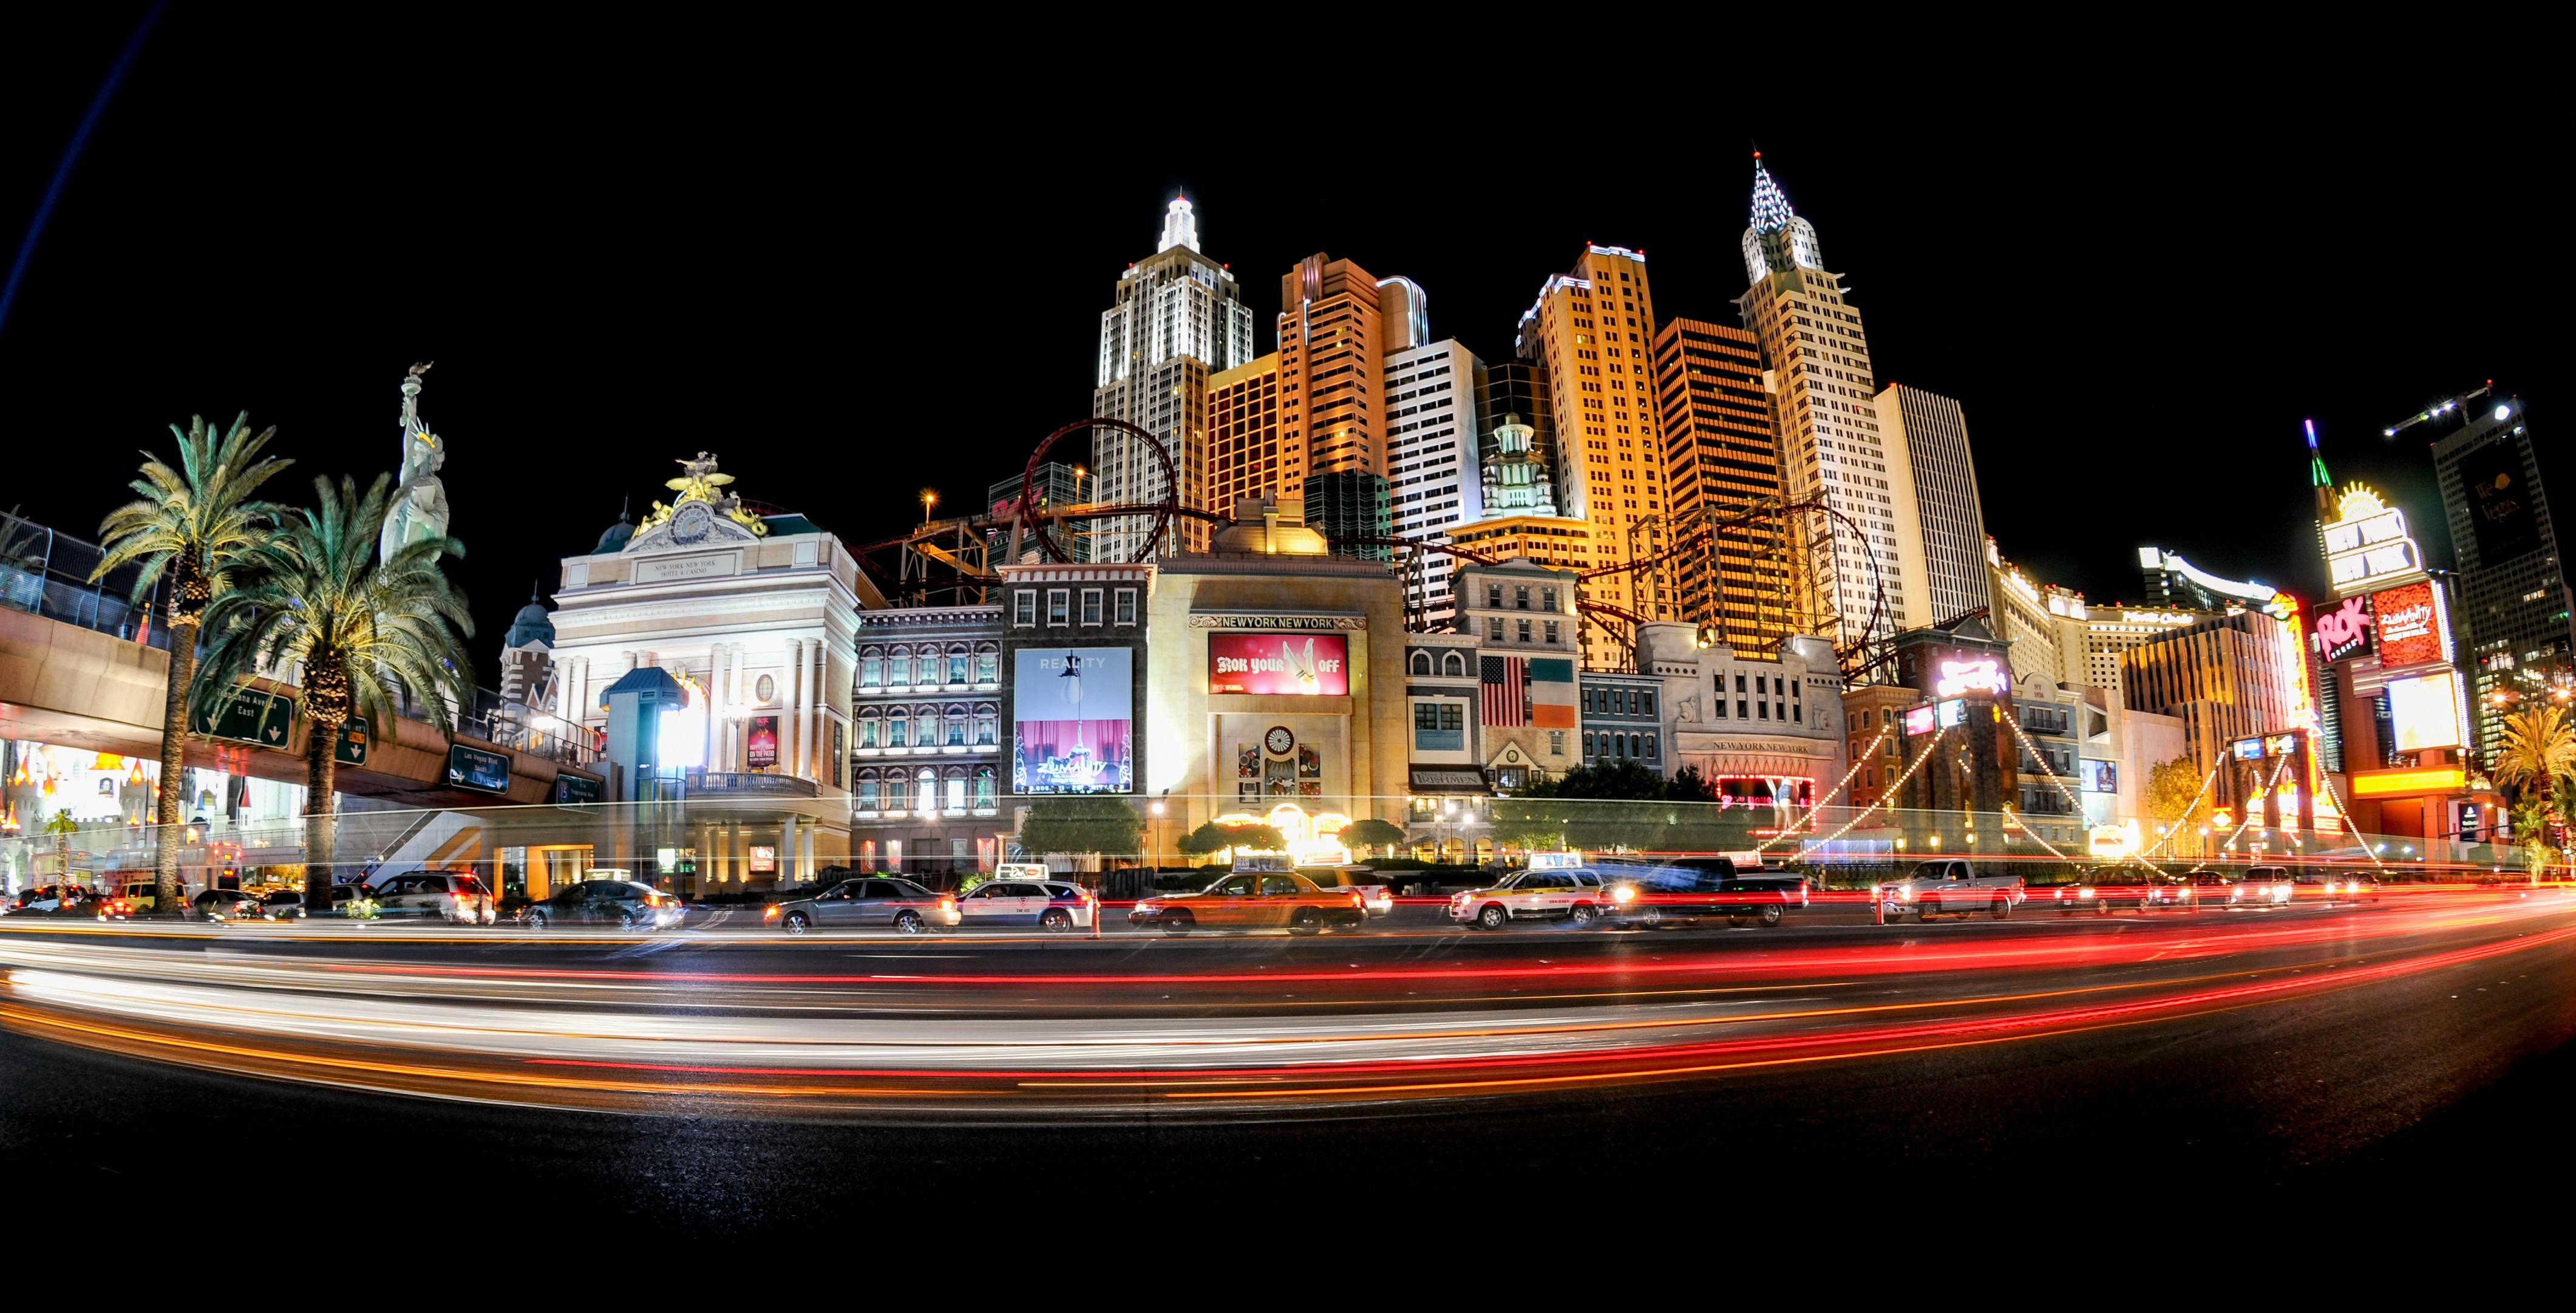 Vegas Atmosphere Las Vegas - a Royalty Free Stock Photo from Photocase